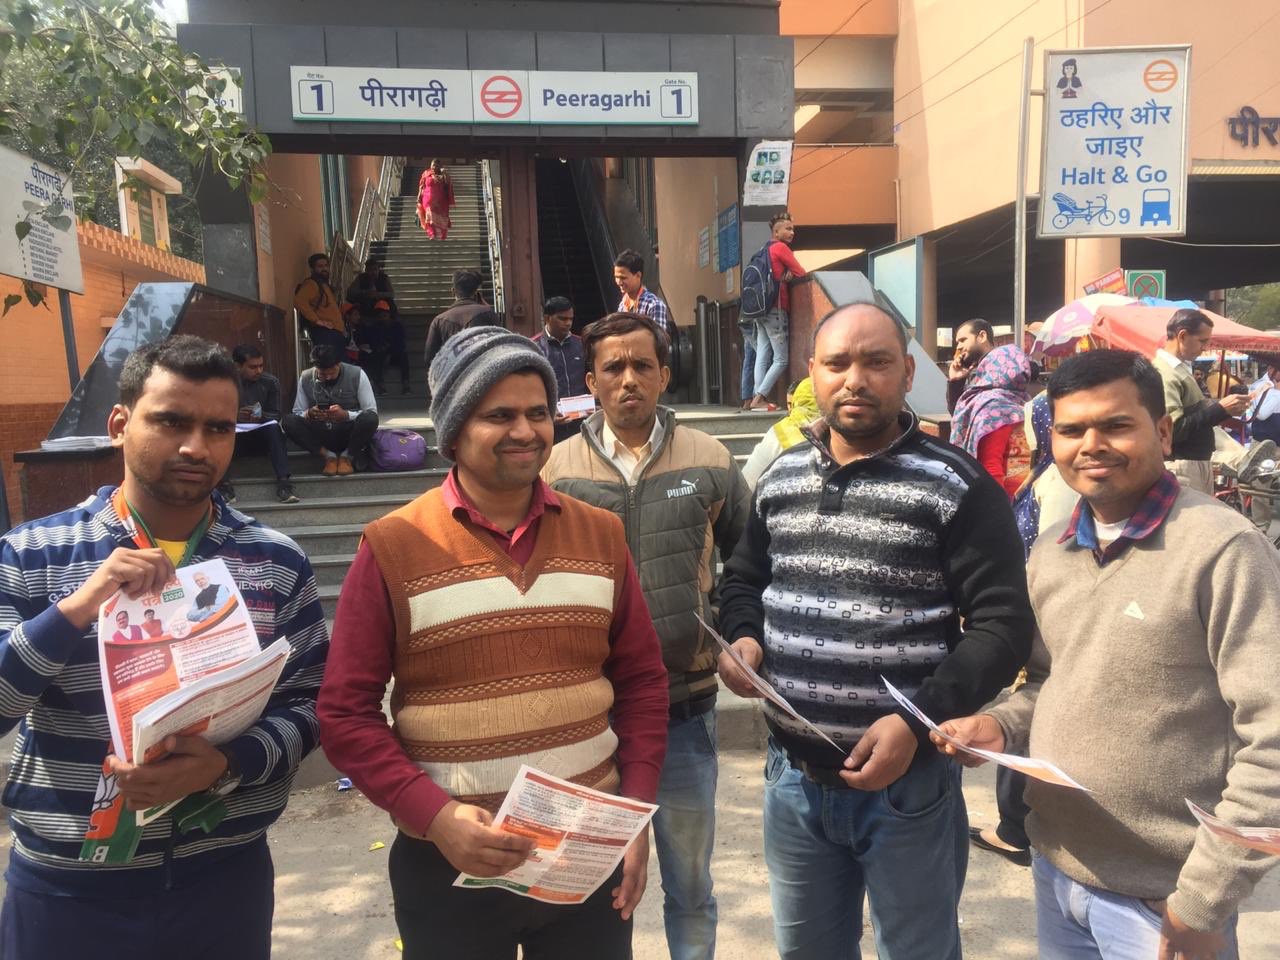 RSS BJP workers distributing pamphlets during Jan Sampark at Peeragarhi Metro Delhi election campaign